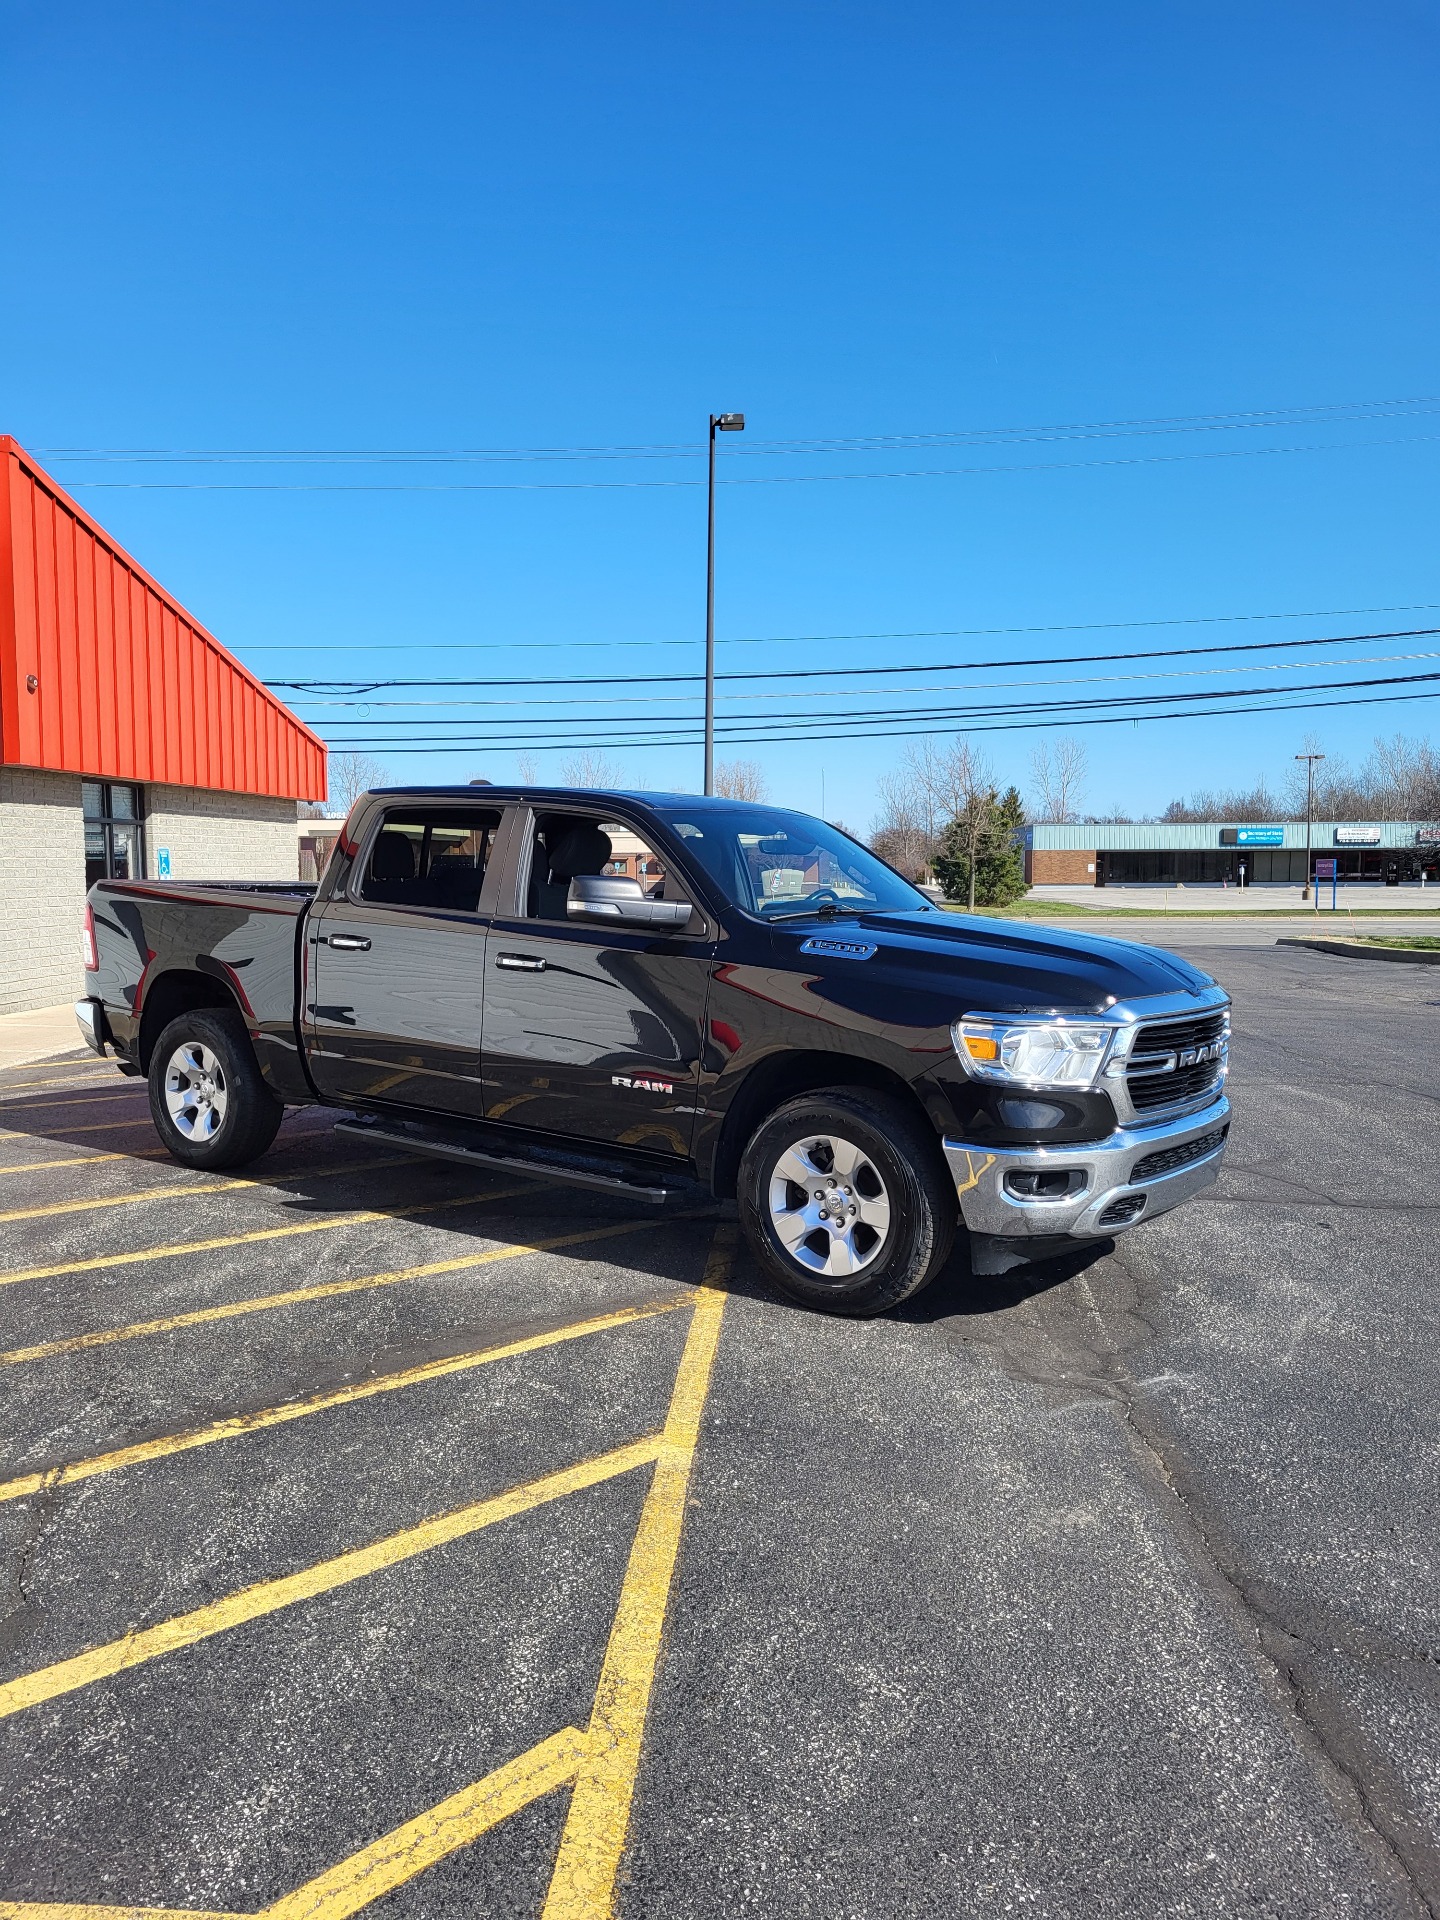 2019 DODGE RAM 1500 in Monroe, Michigan - Photo 1